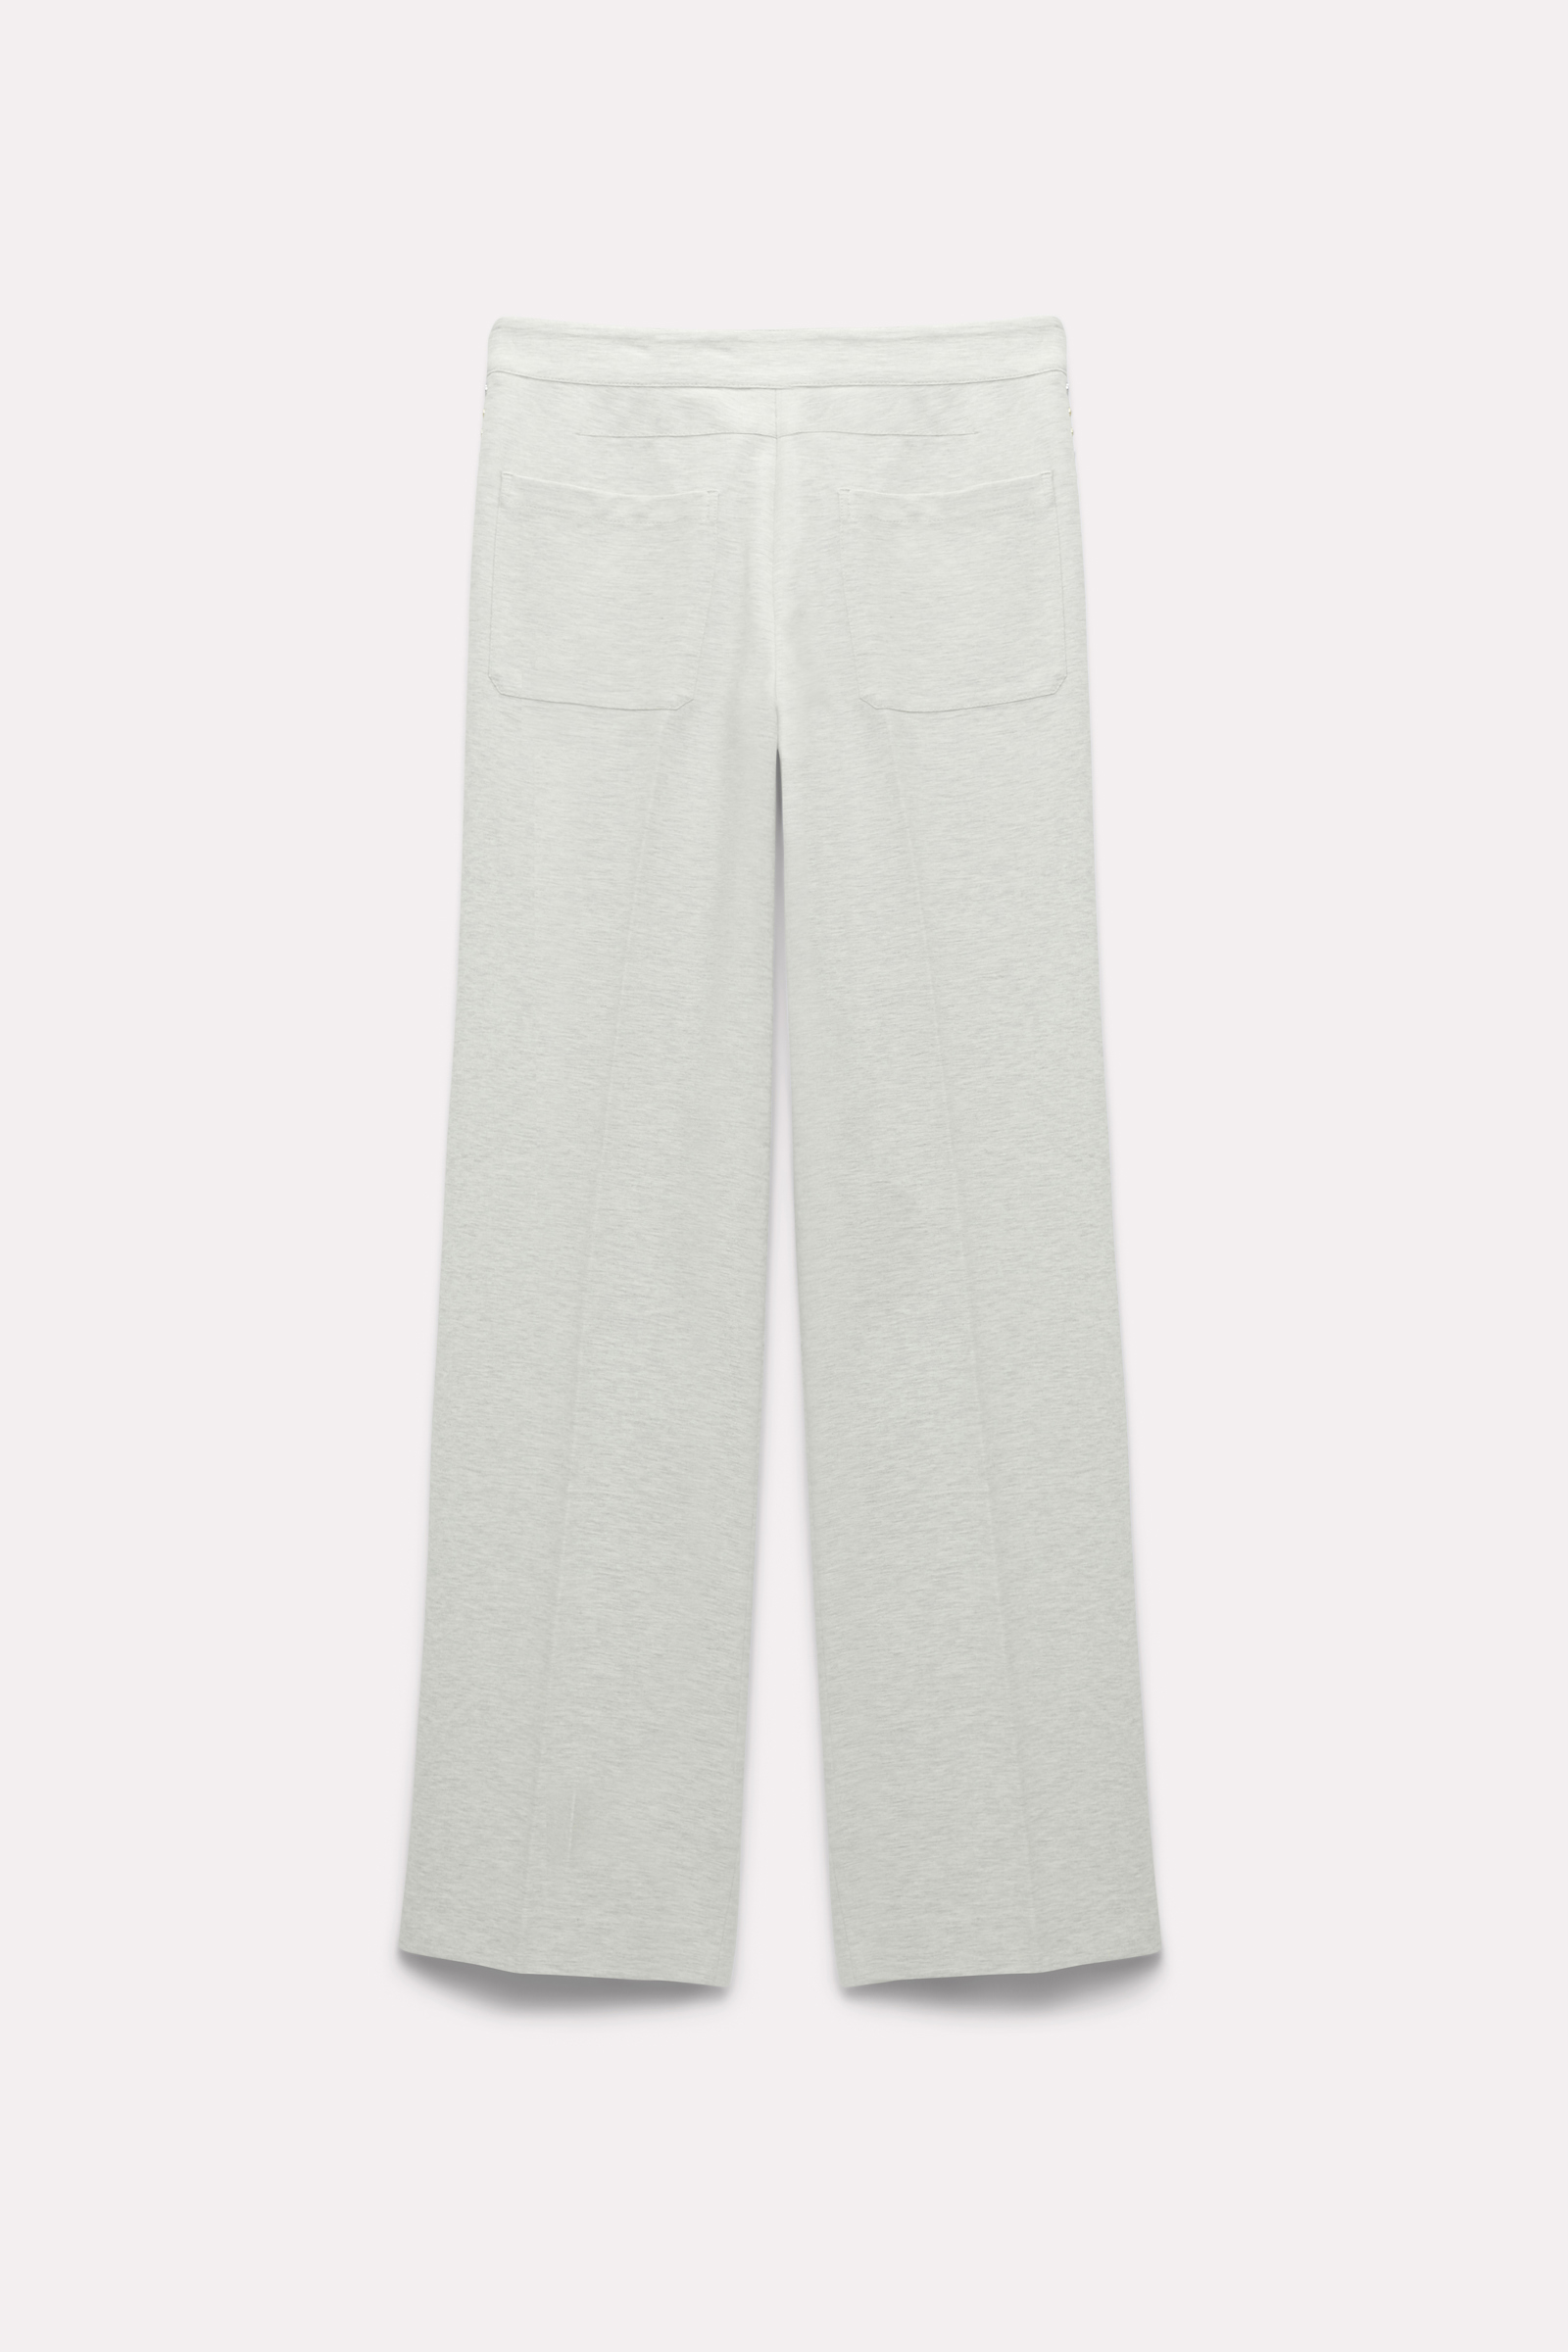 Dorothee Schumacher Stud-embellished pants in Punto Milano light grey